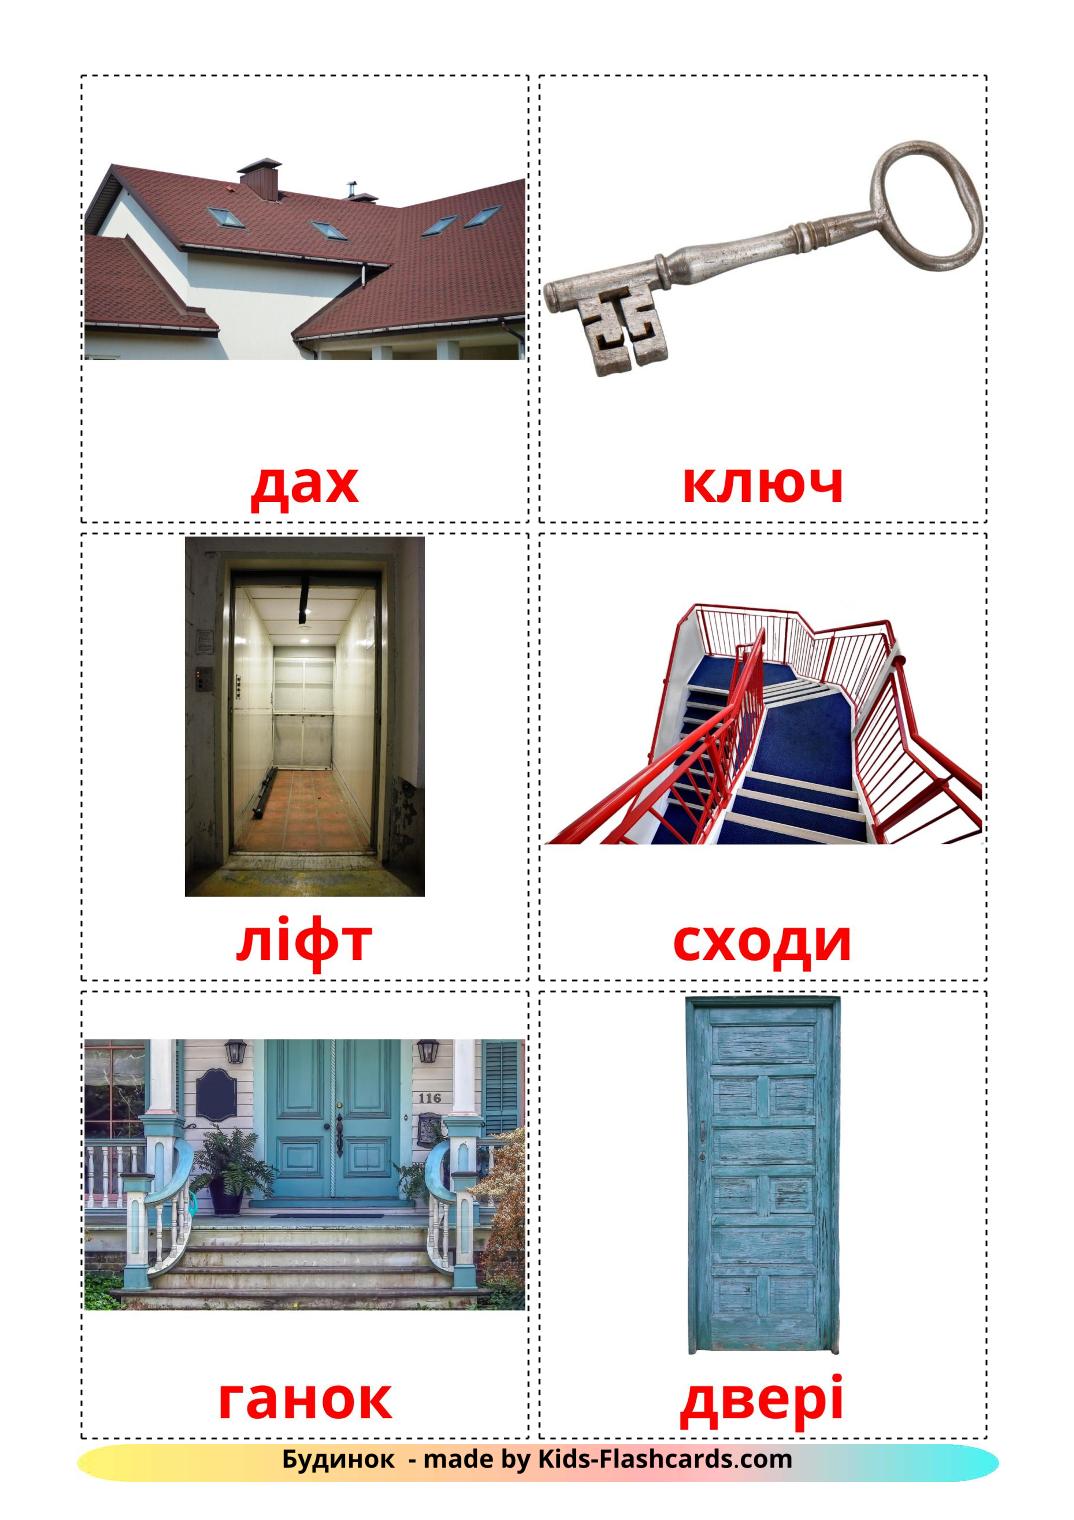 Casa - 25 flashcards ucraino stampabili gratuitamente